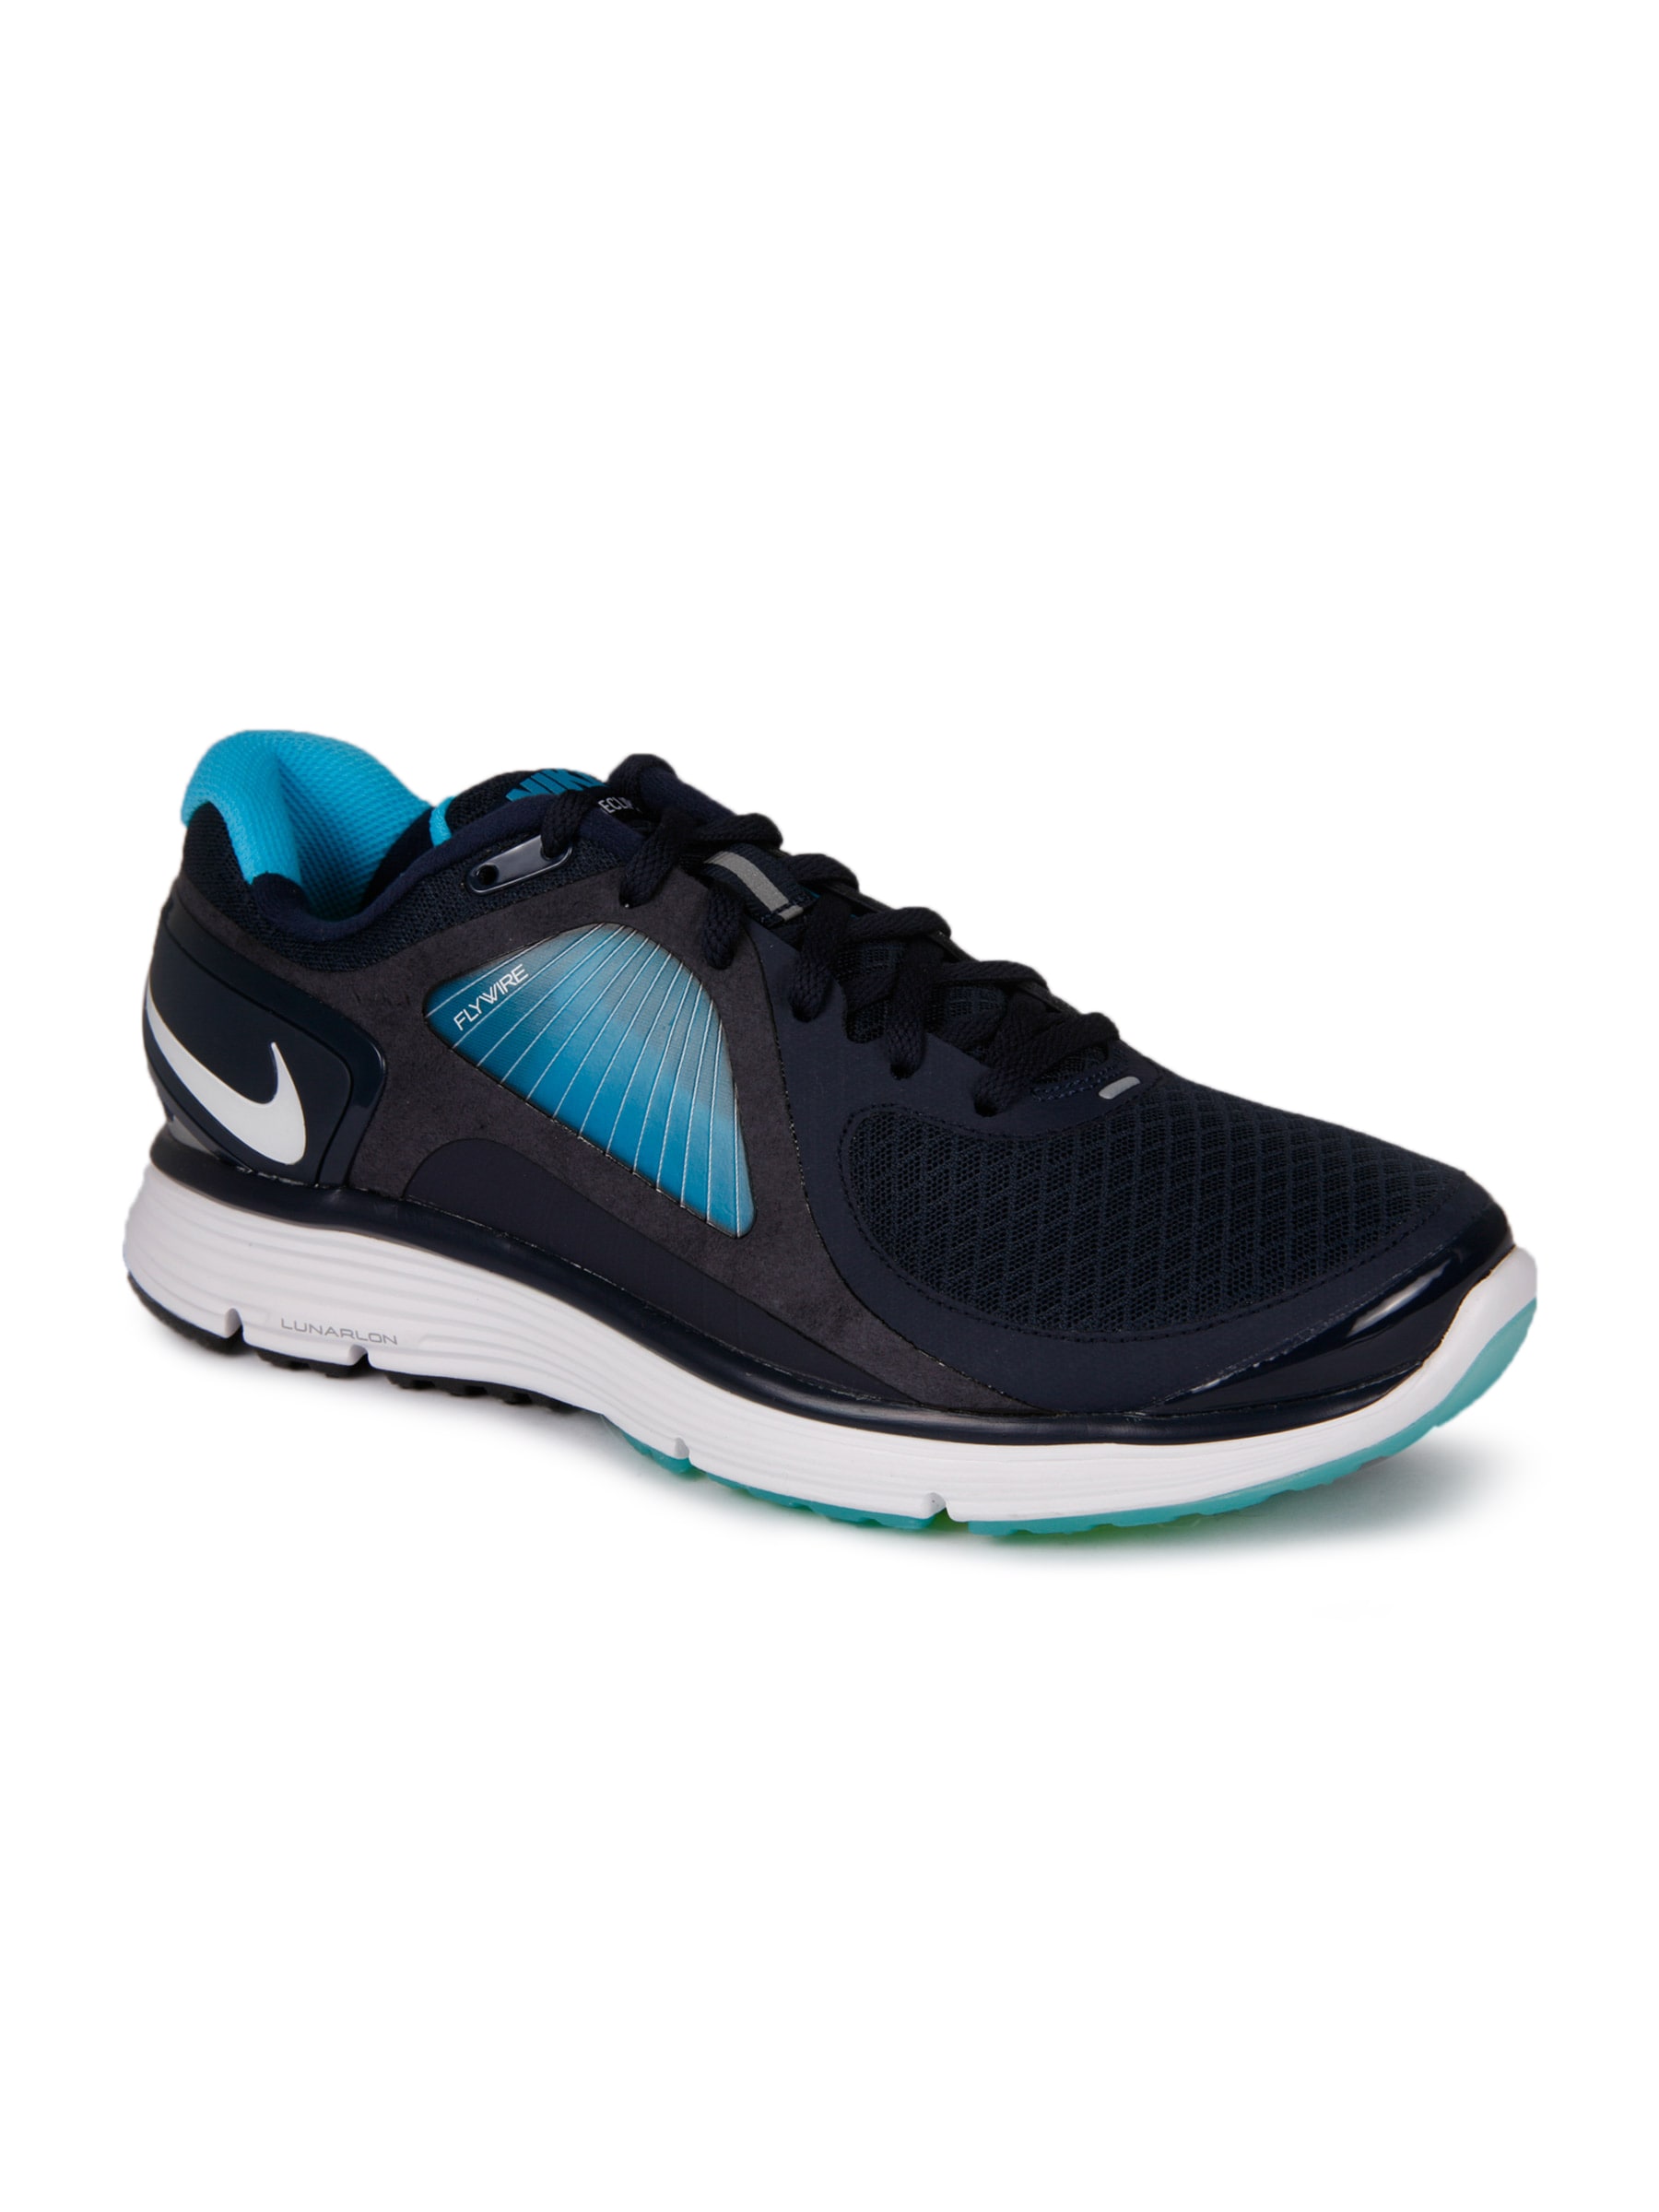 Nike Men's Lunareclipse+ Navy Blue Shoe